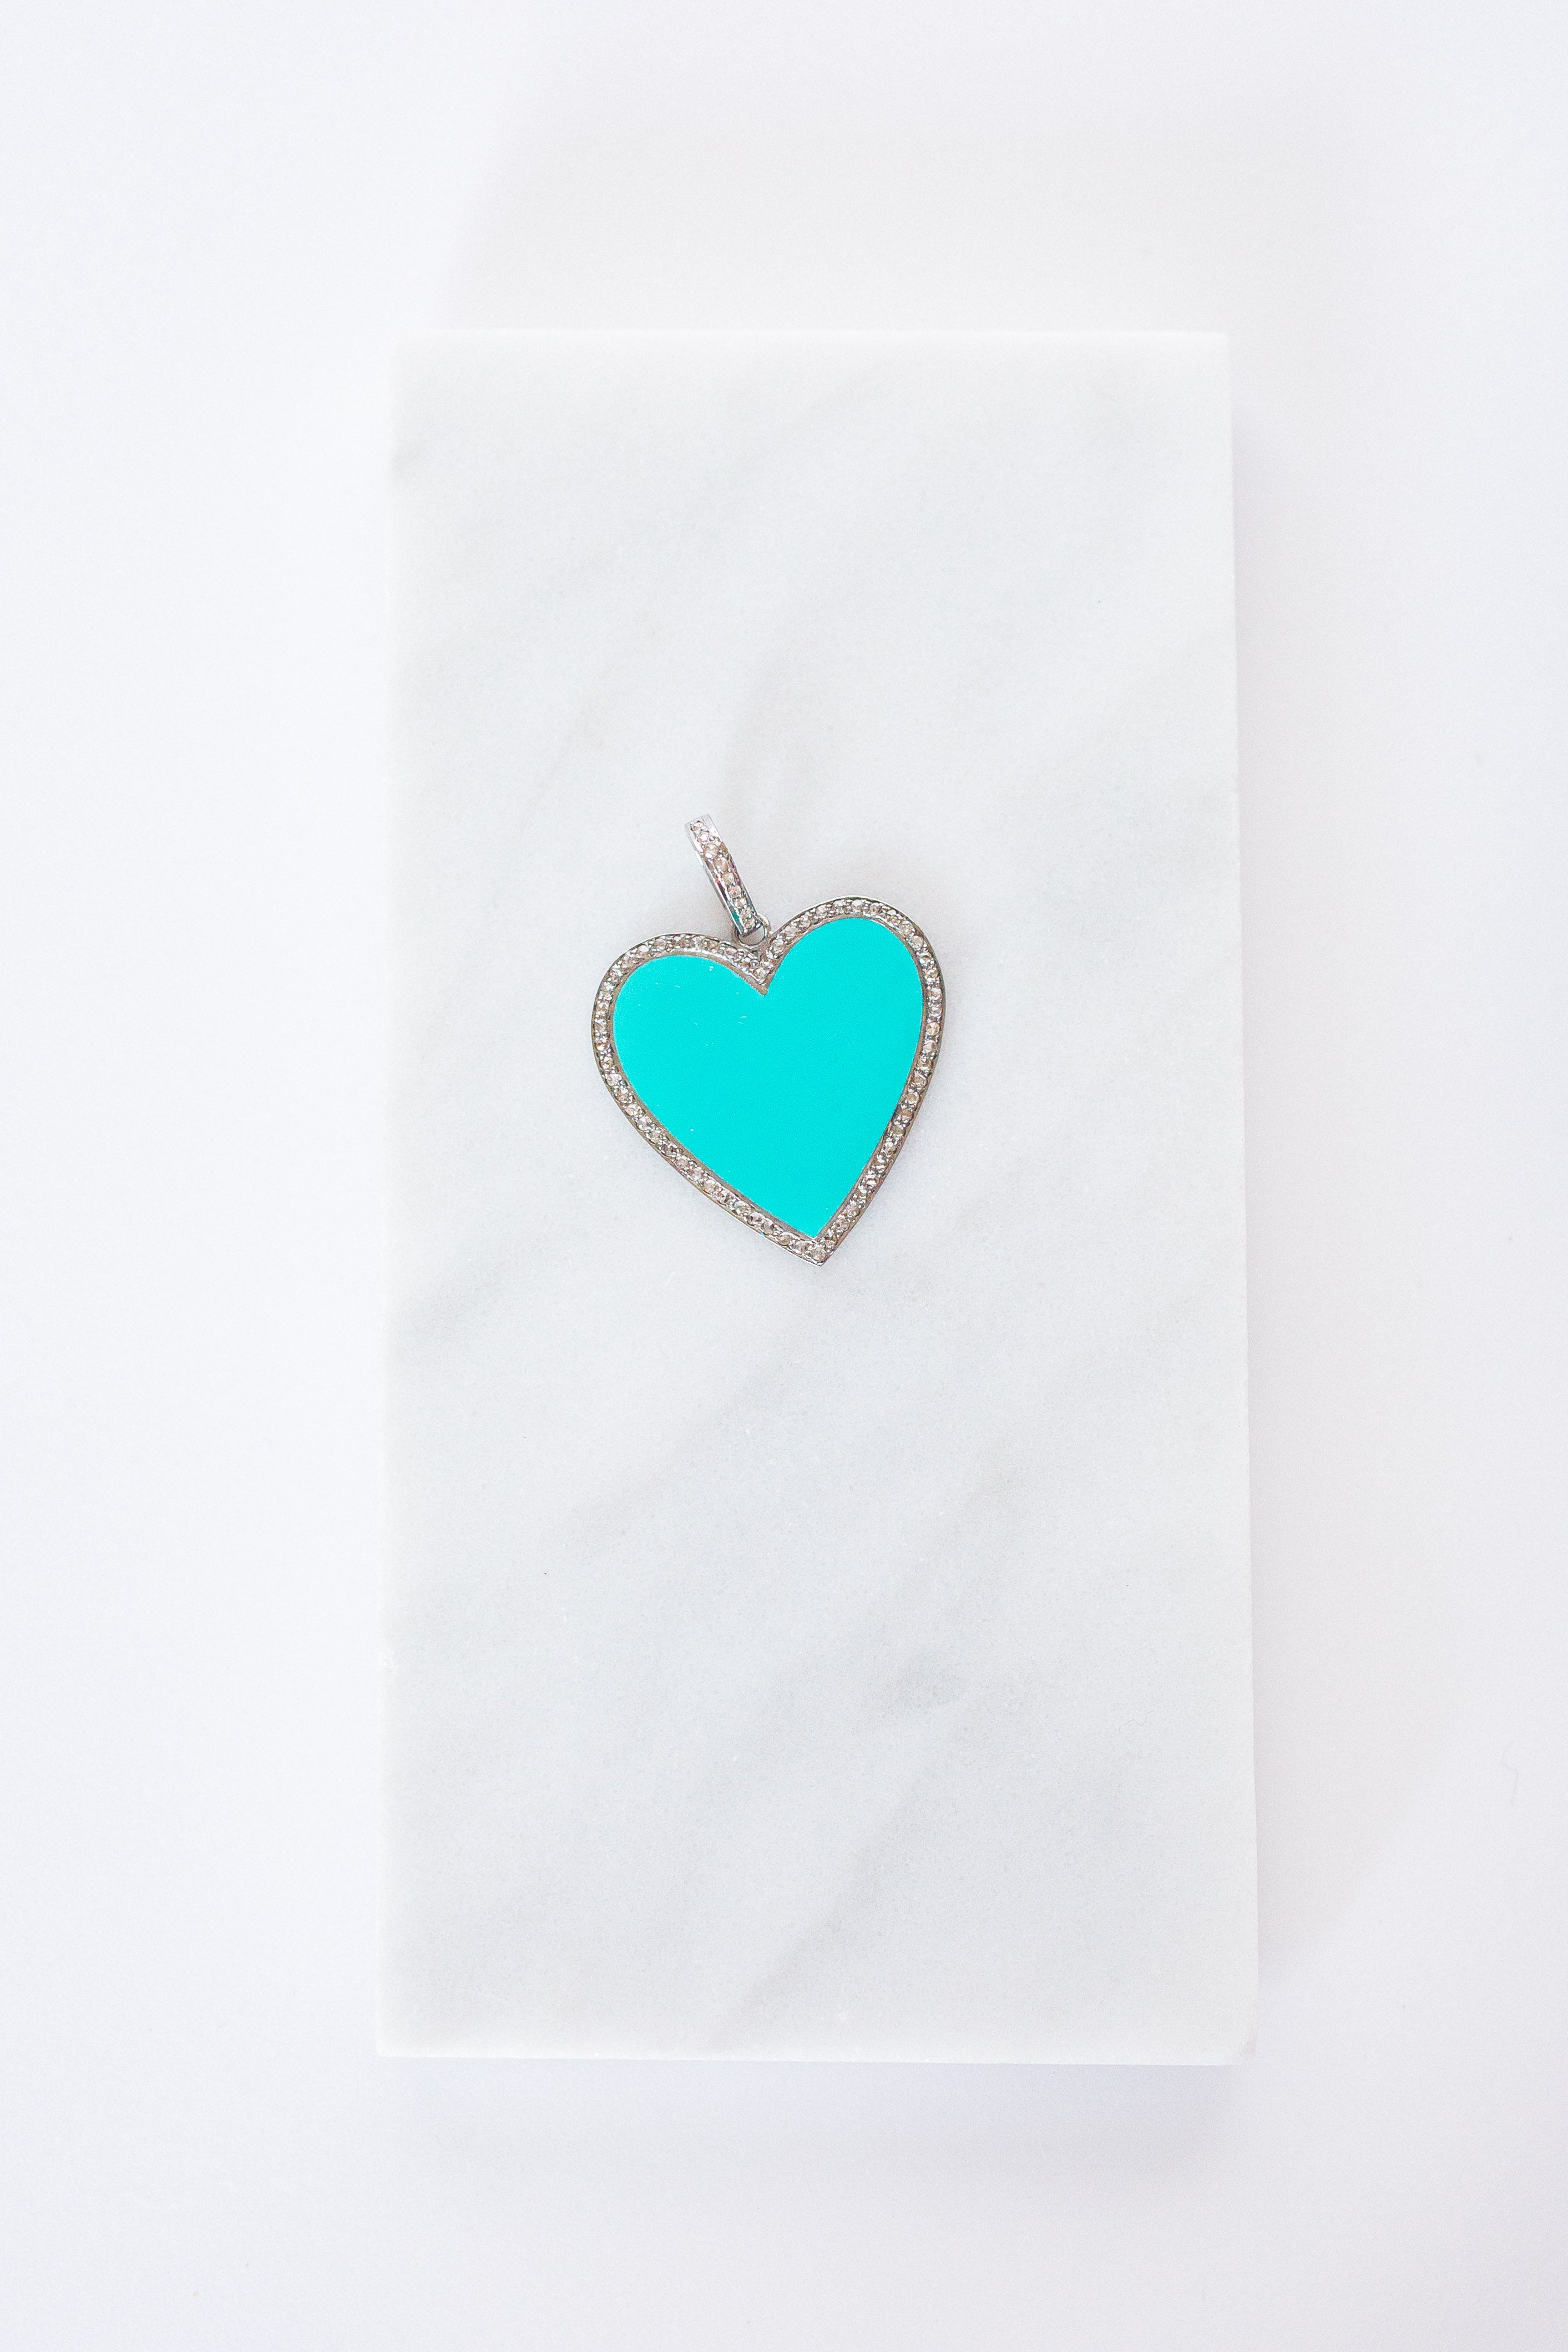 C118 - medium heart turquoise/silver